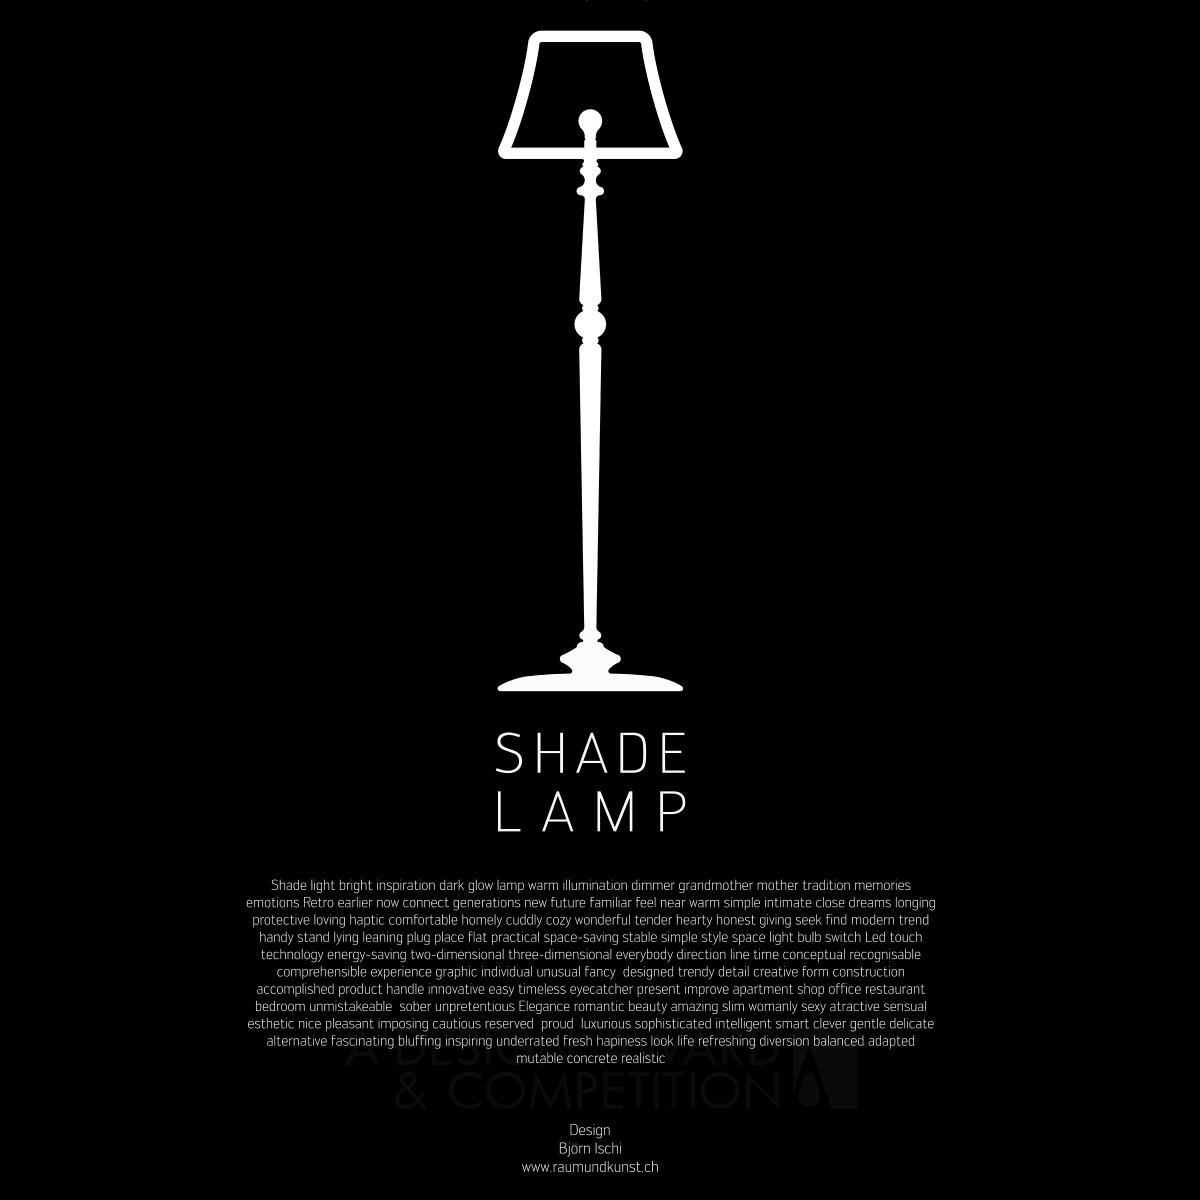 SHADE LAMP Light by Björn Ischi